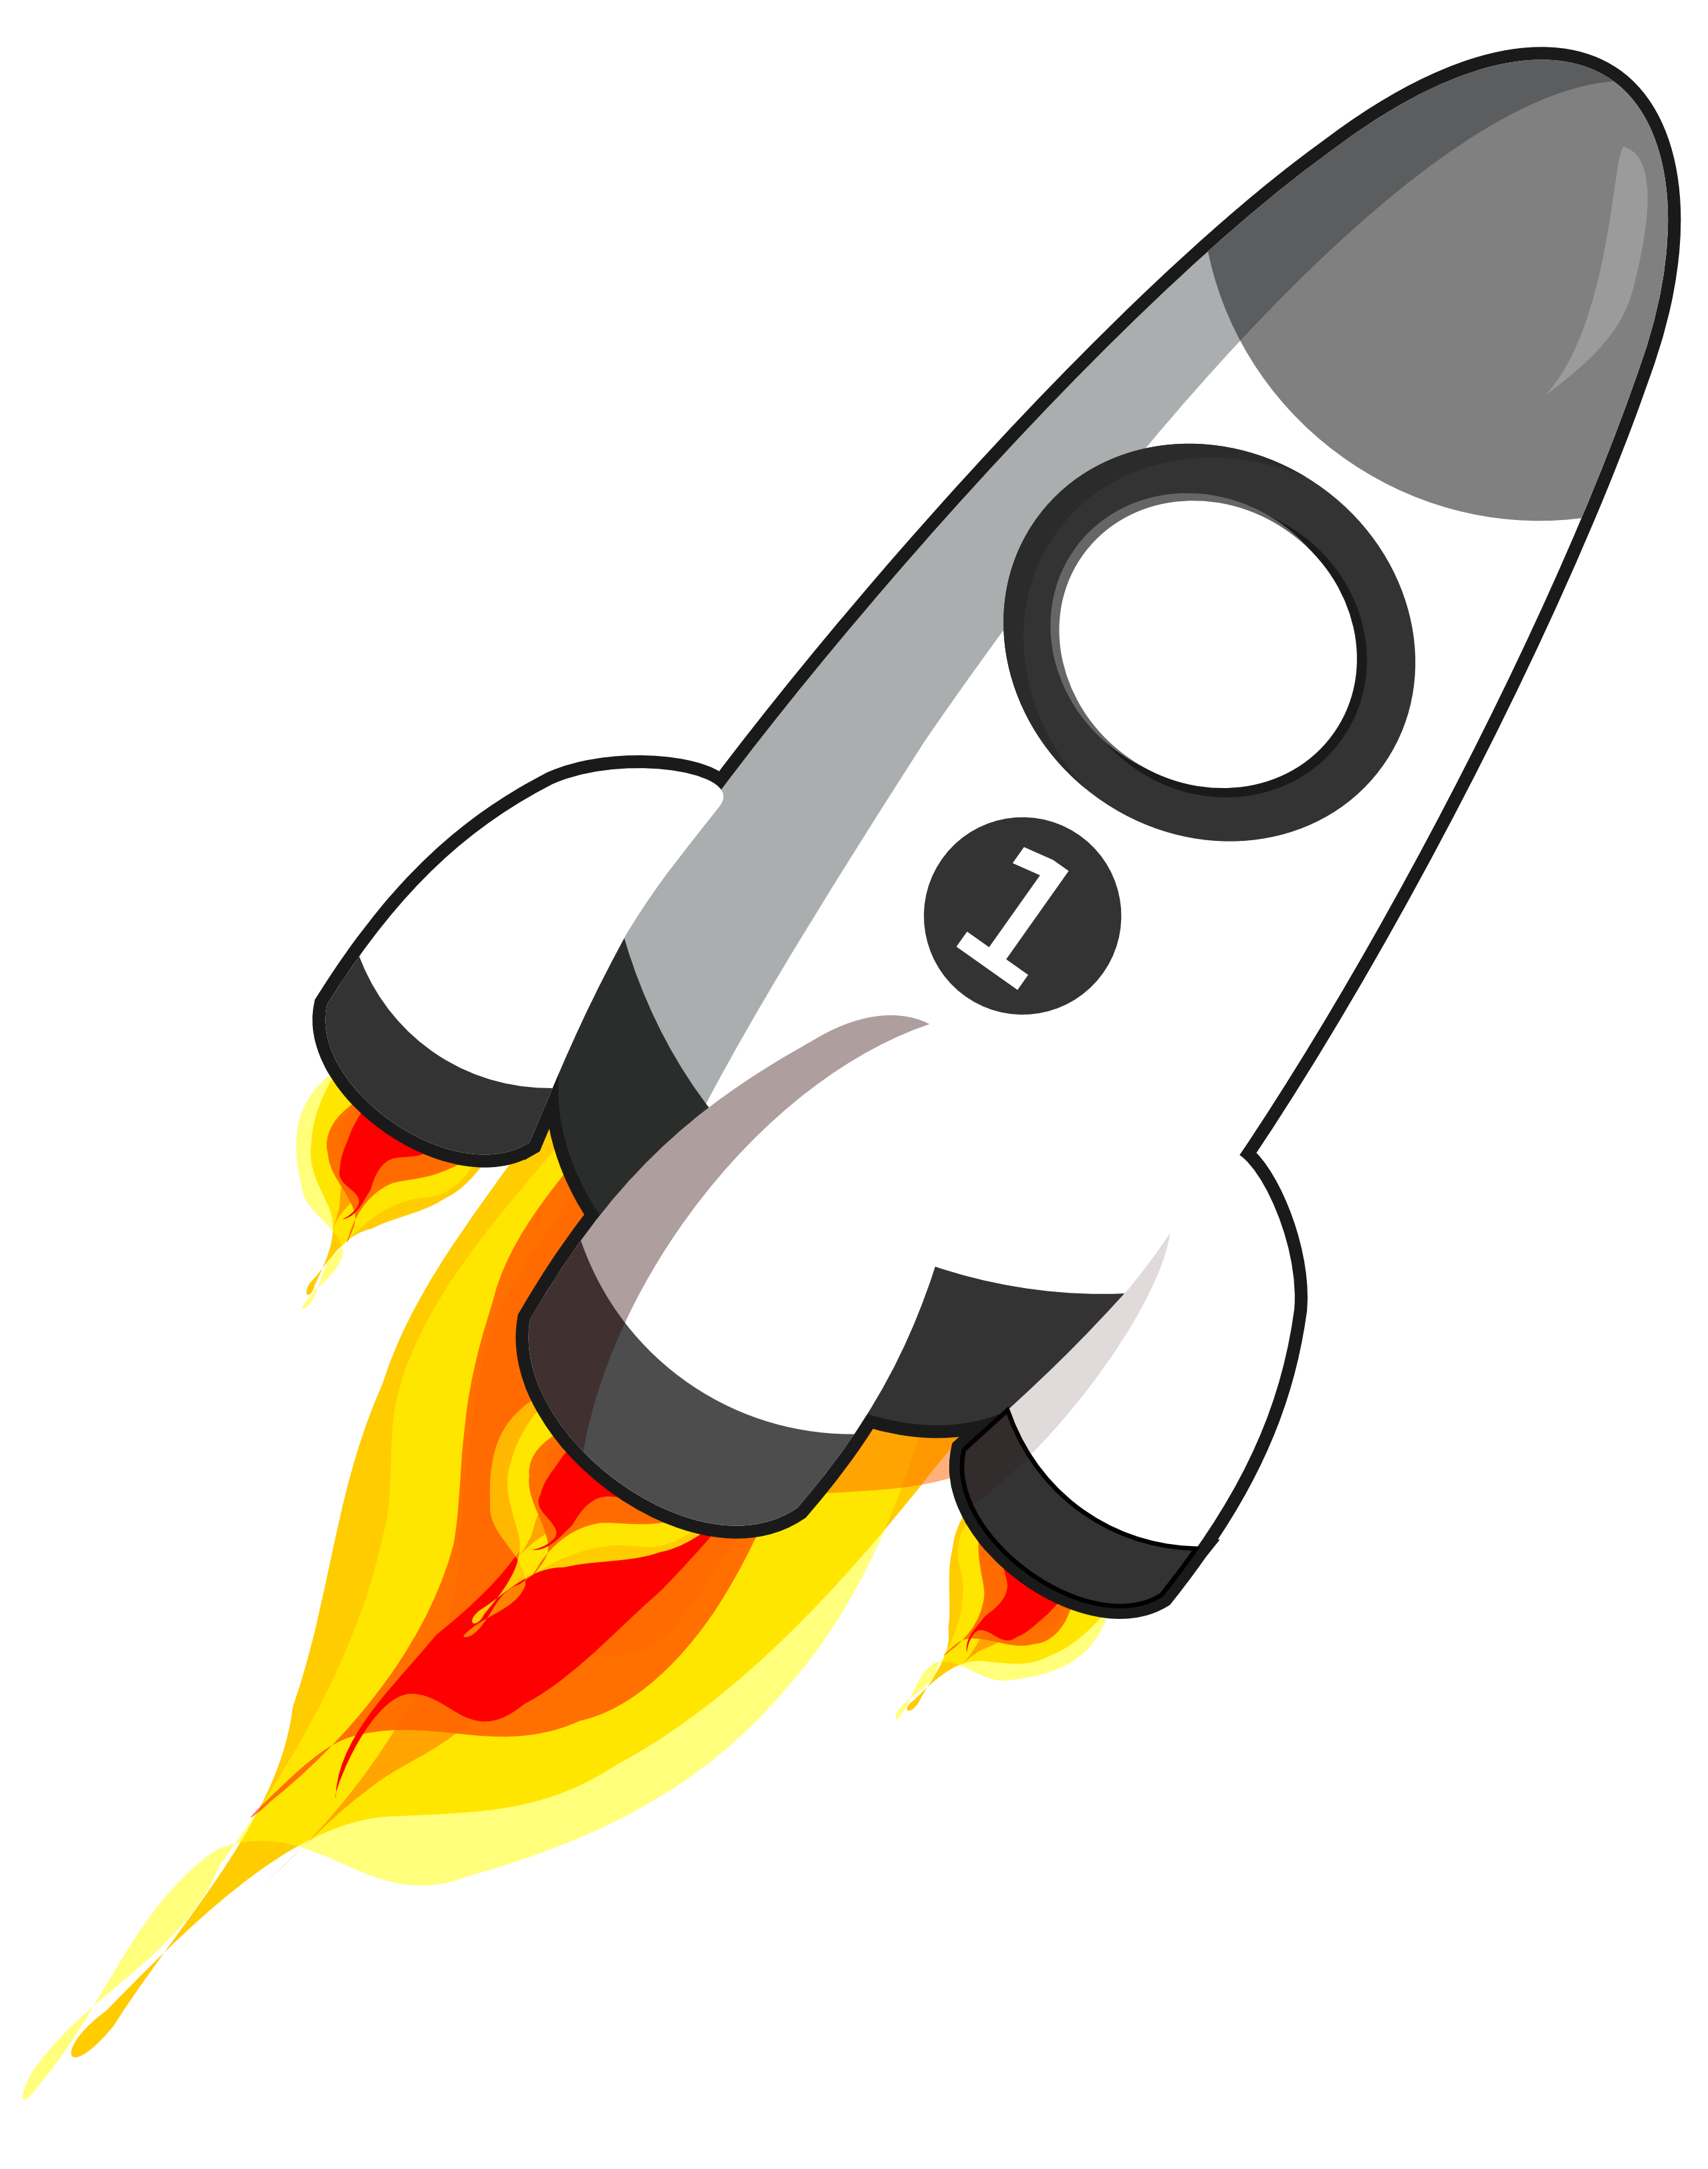 Rocketship clipart cartoon. Rocket ship black and